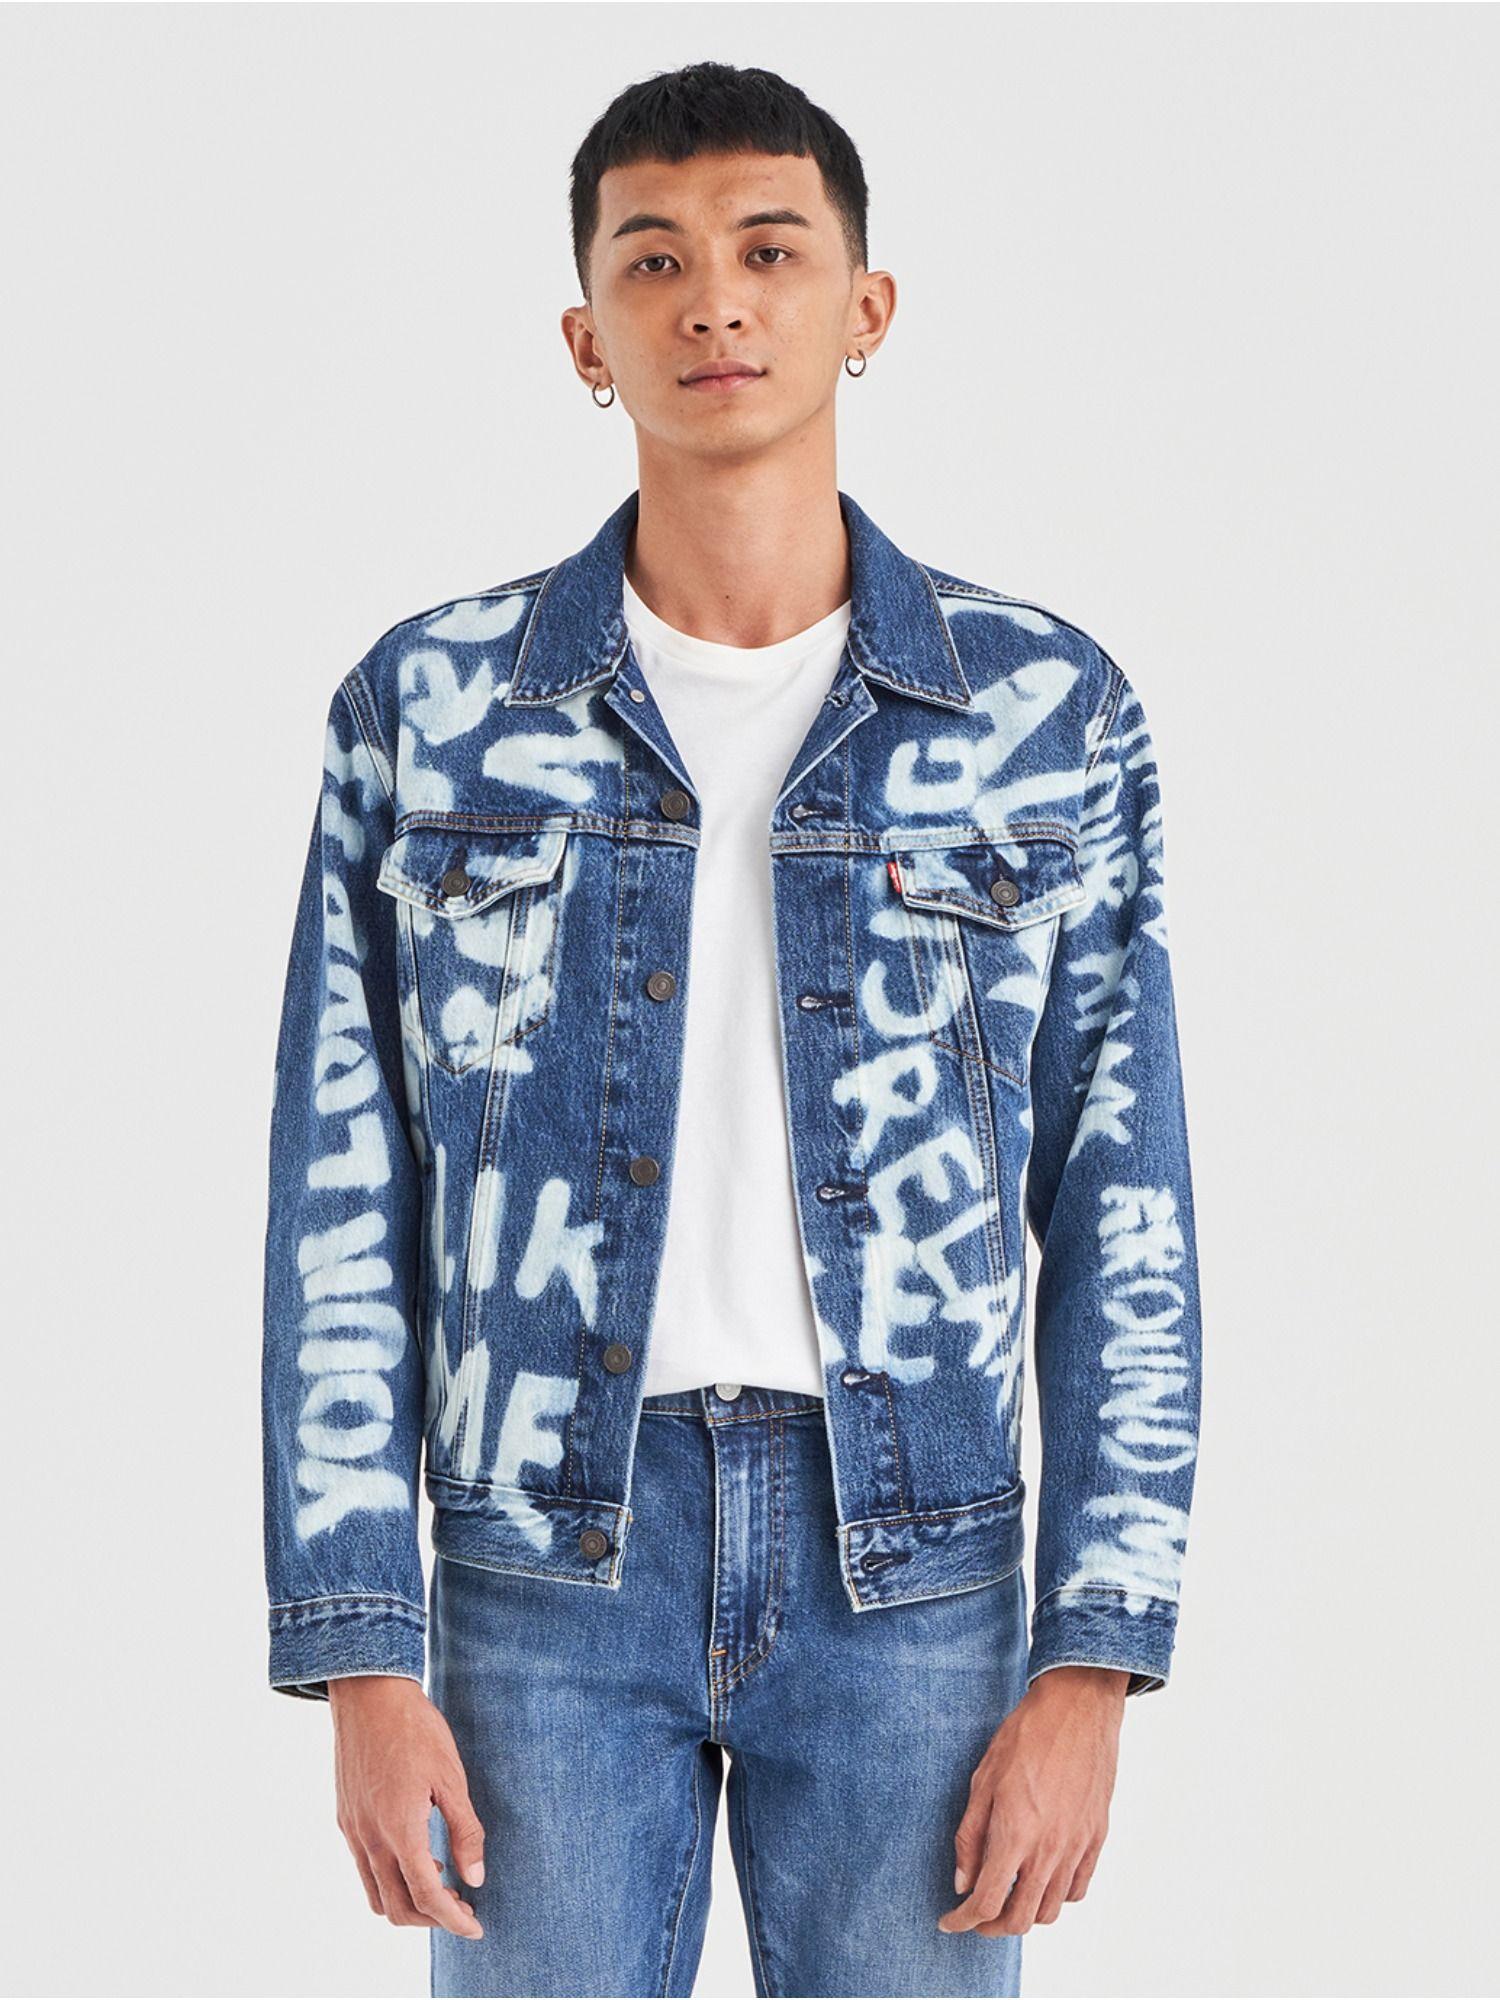 men's-graphic-print-blue-spread-collar-jackets